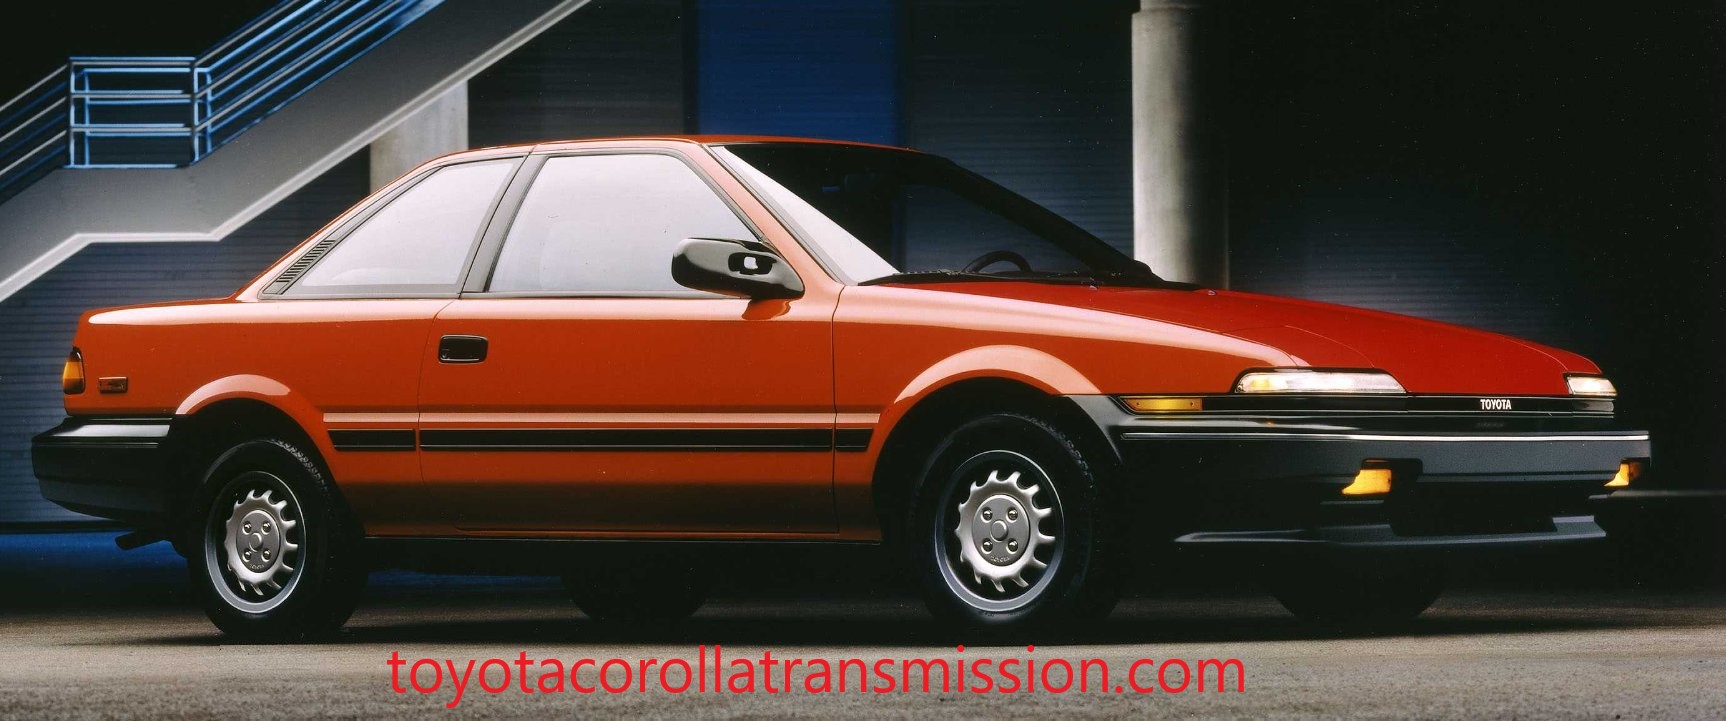 1990 Toyota Corolla Transmission